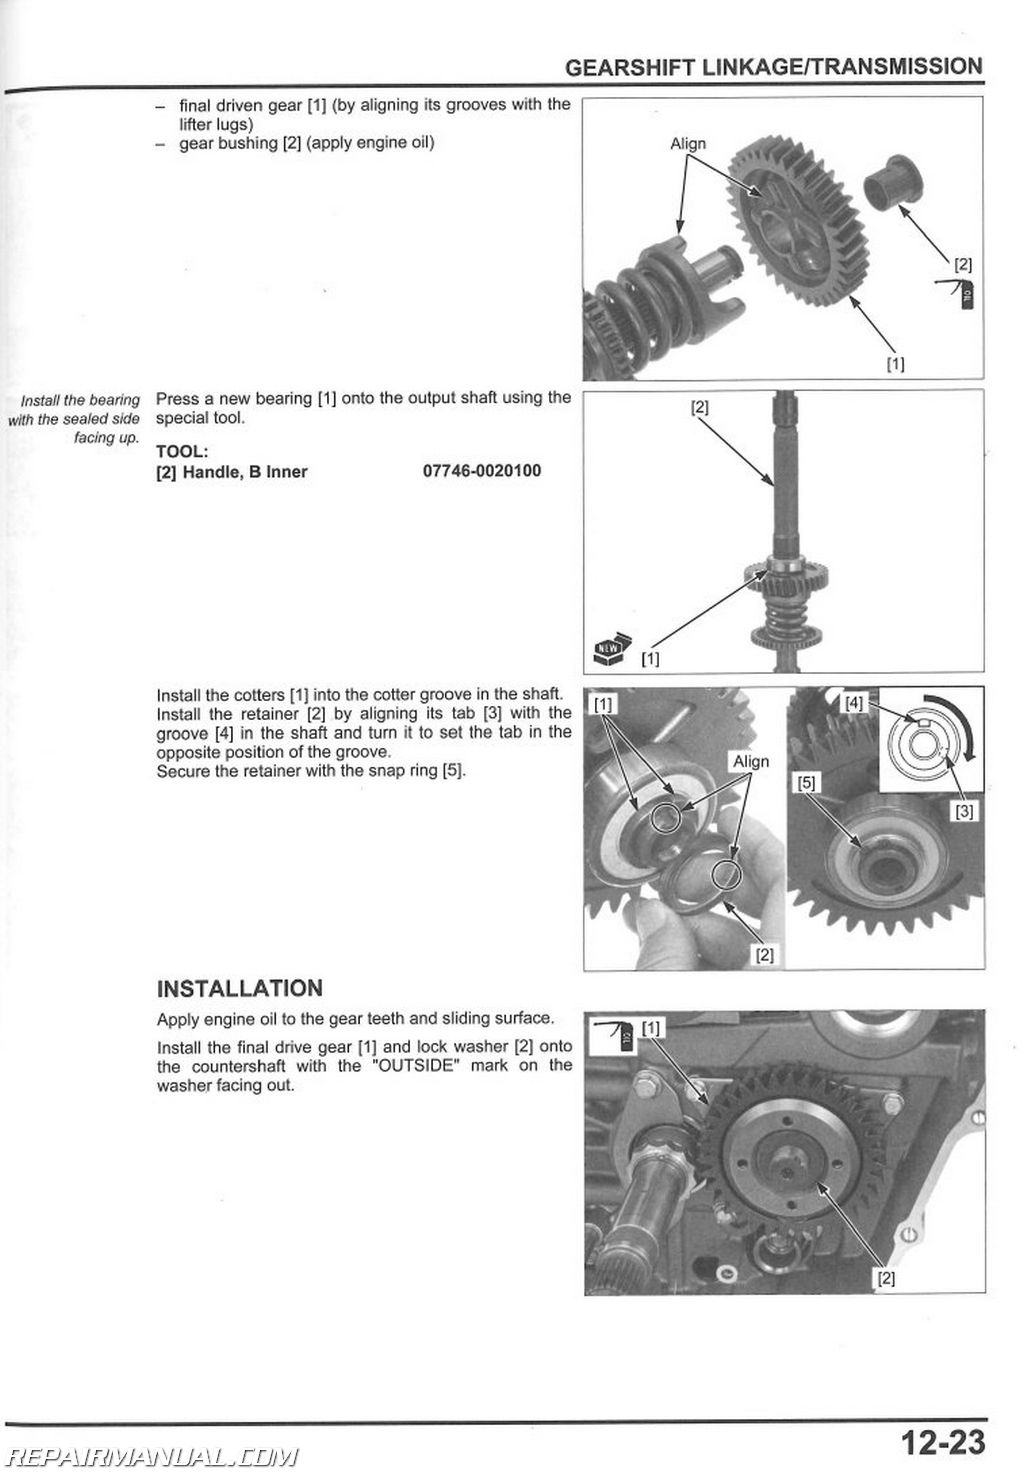 2014 Honda GL1800 C A Valkyrie Service Manual - RepairManual.com | eBay